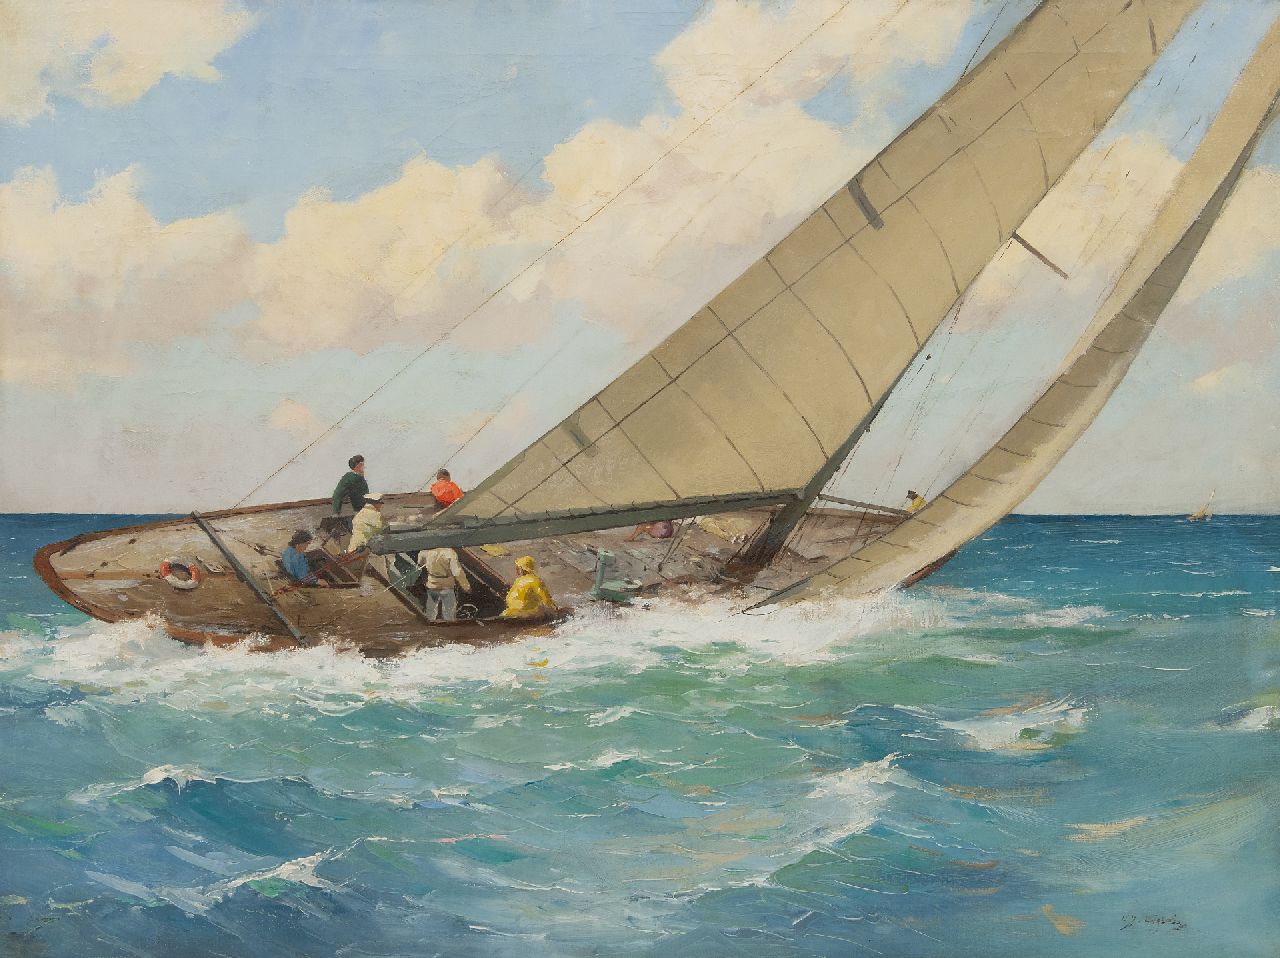 Ligtelijn E.J.  | Evert Jan Ligtelijn, Sailing yacht in a regatta, oil on canvas 60.2 x 79.6 cm, signed l.r.